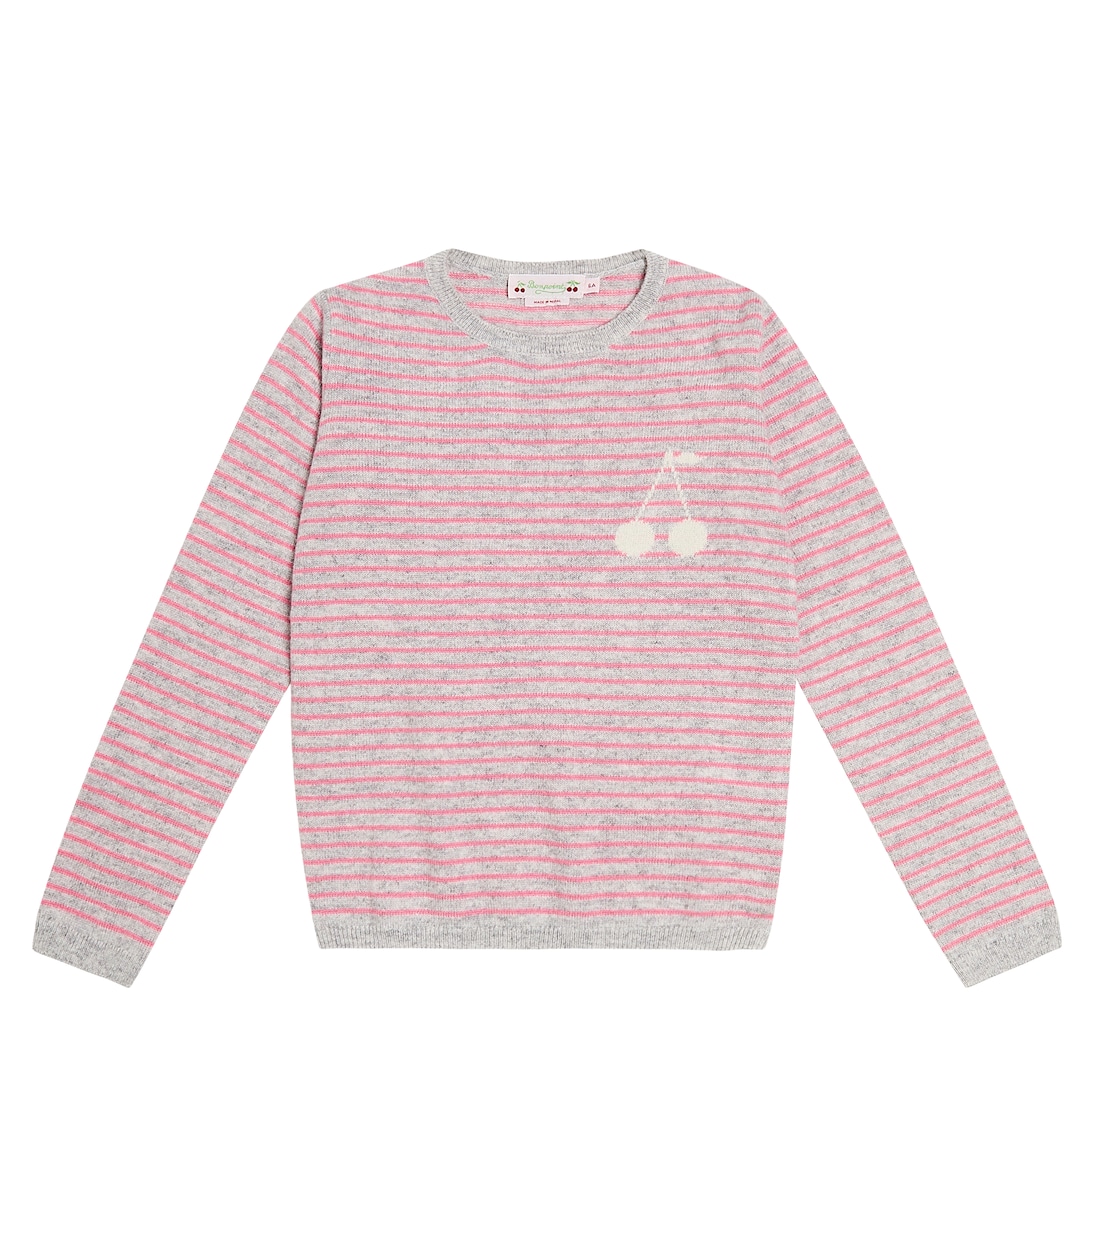 Кашемировый свитер вязки интарсия brunelle Bonpoint, розовый полосатый свитер вязки интарсия marni шафрановый